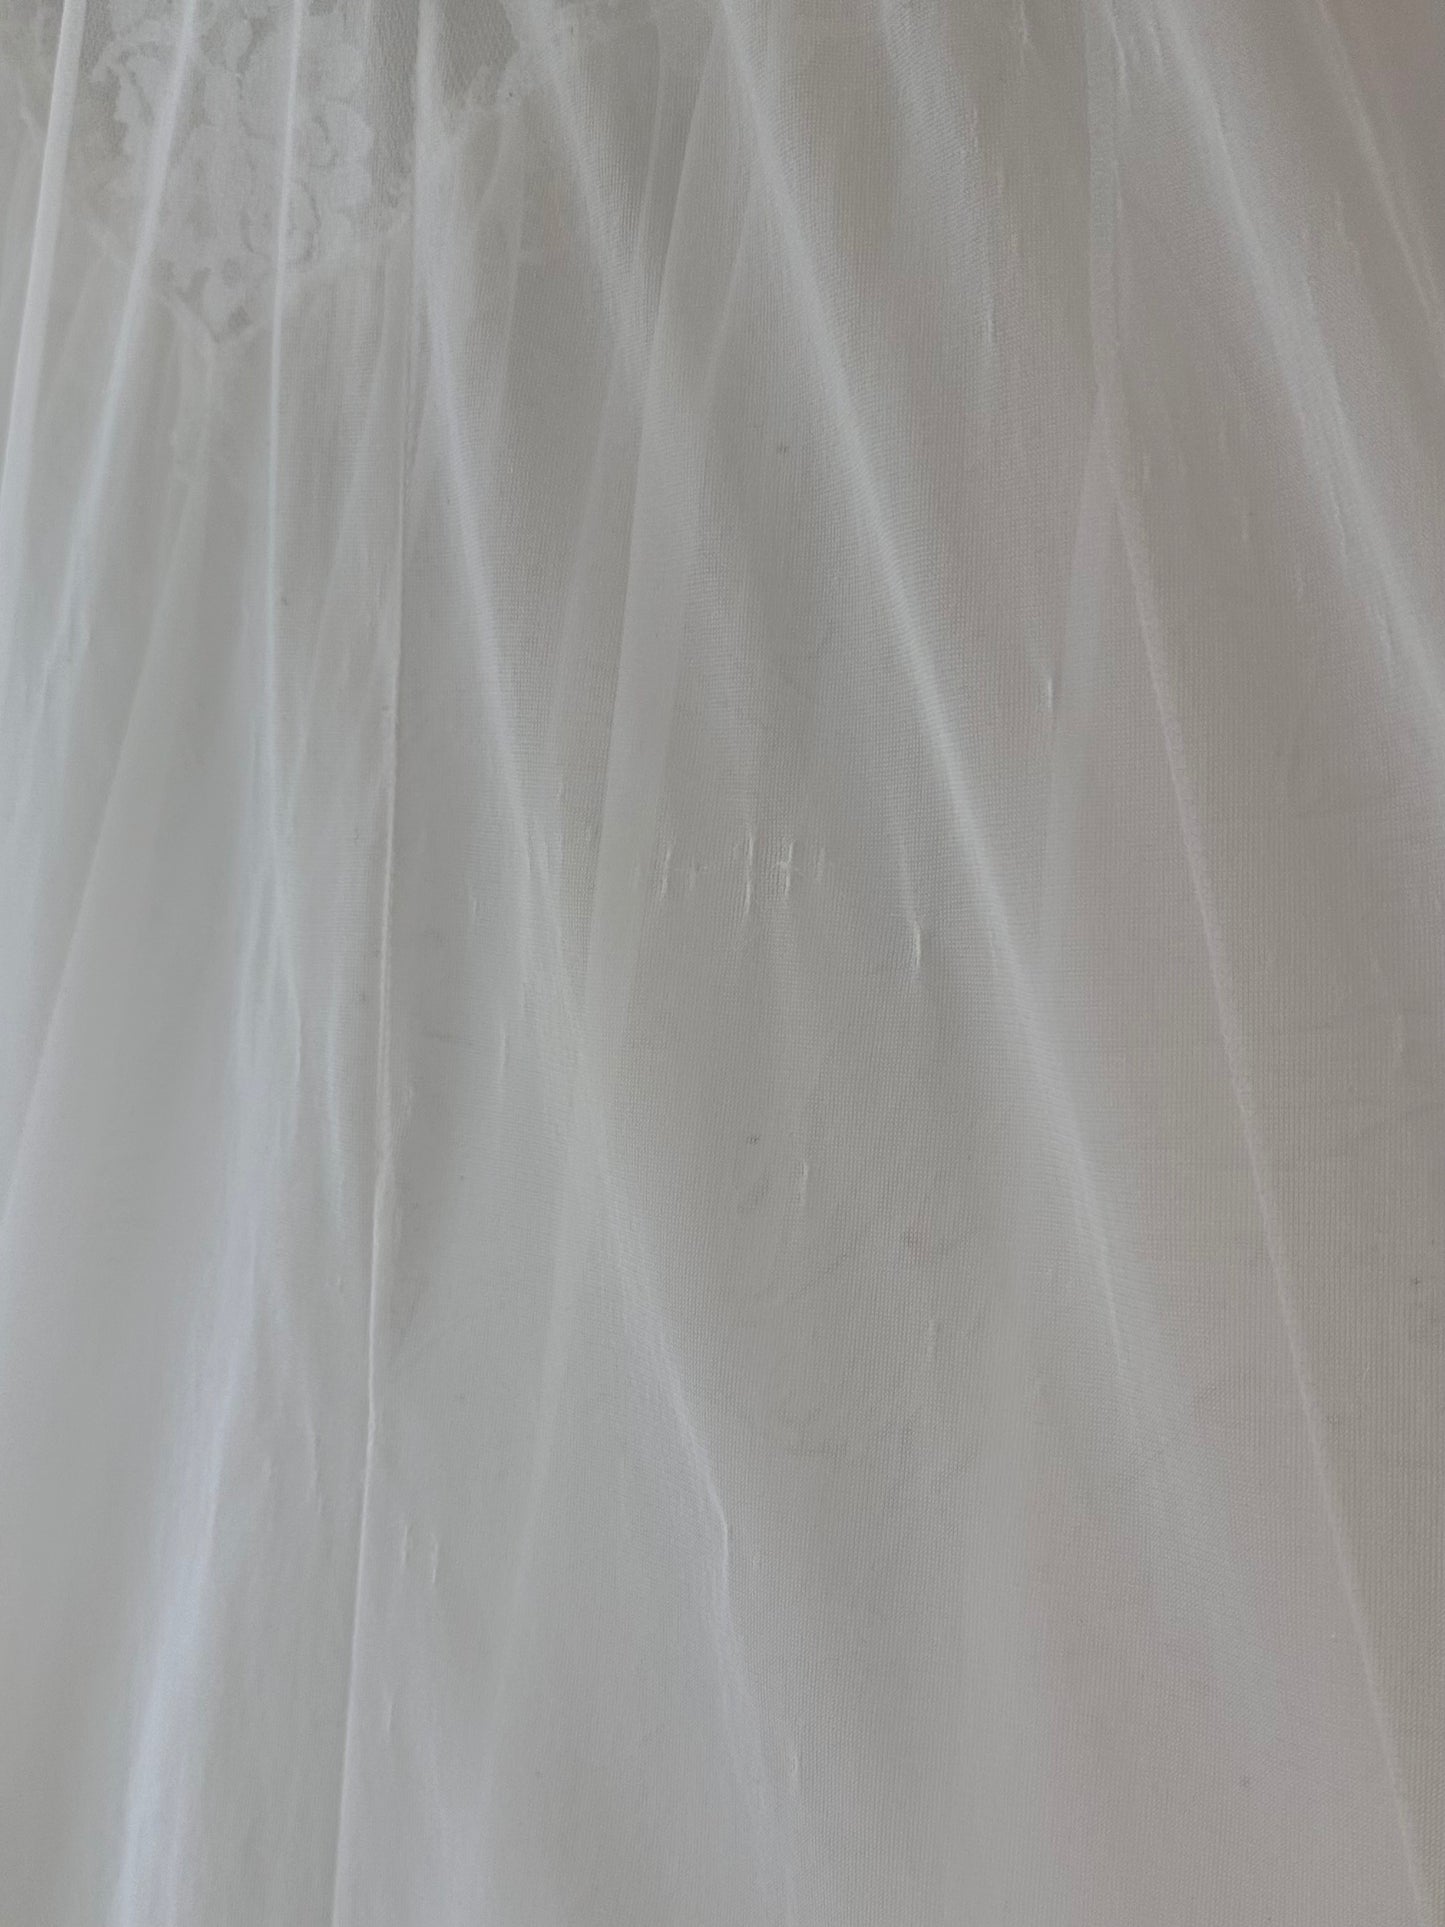 Vintage White Lace Lingerie Slip Dress / Small